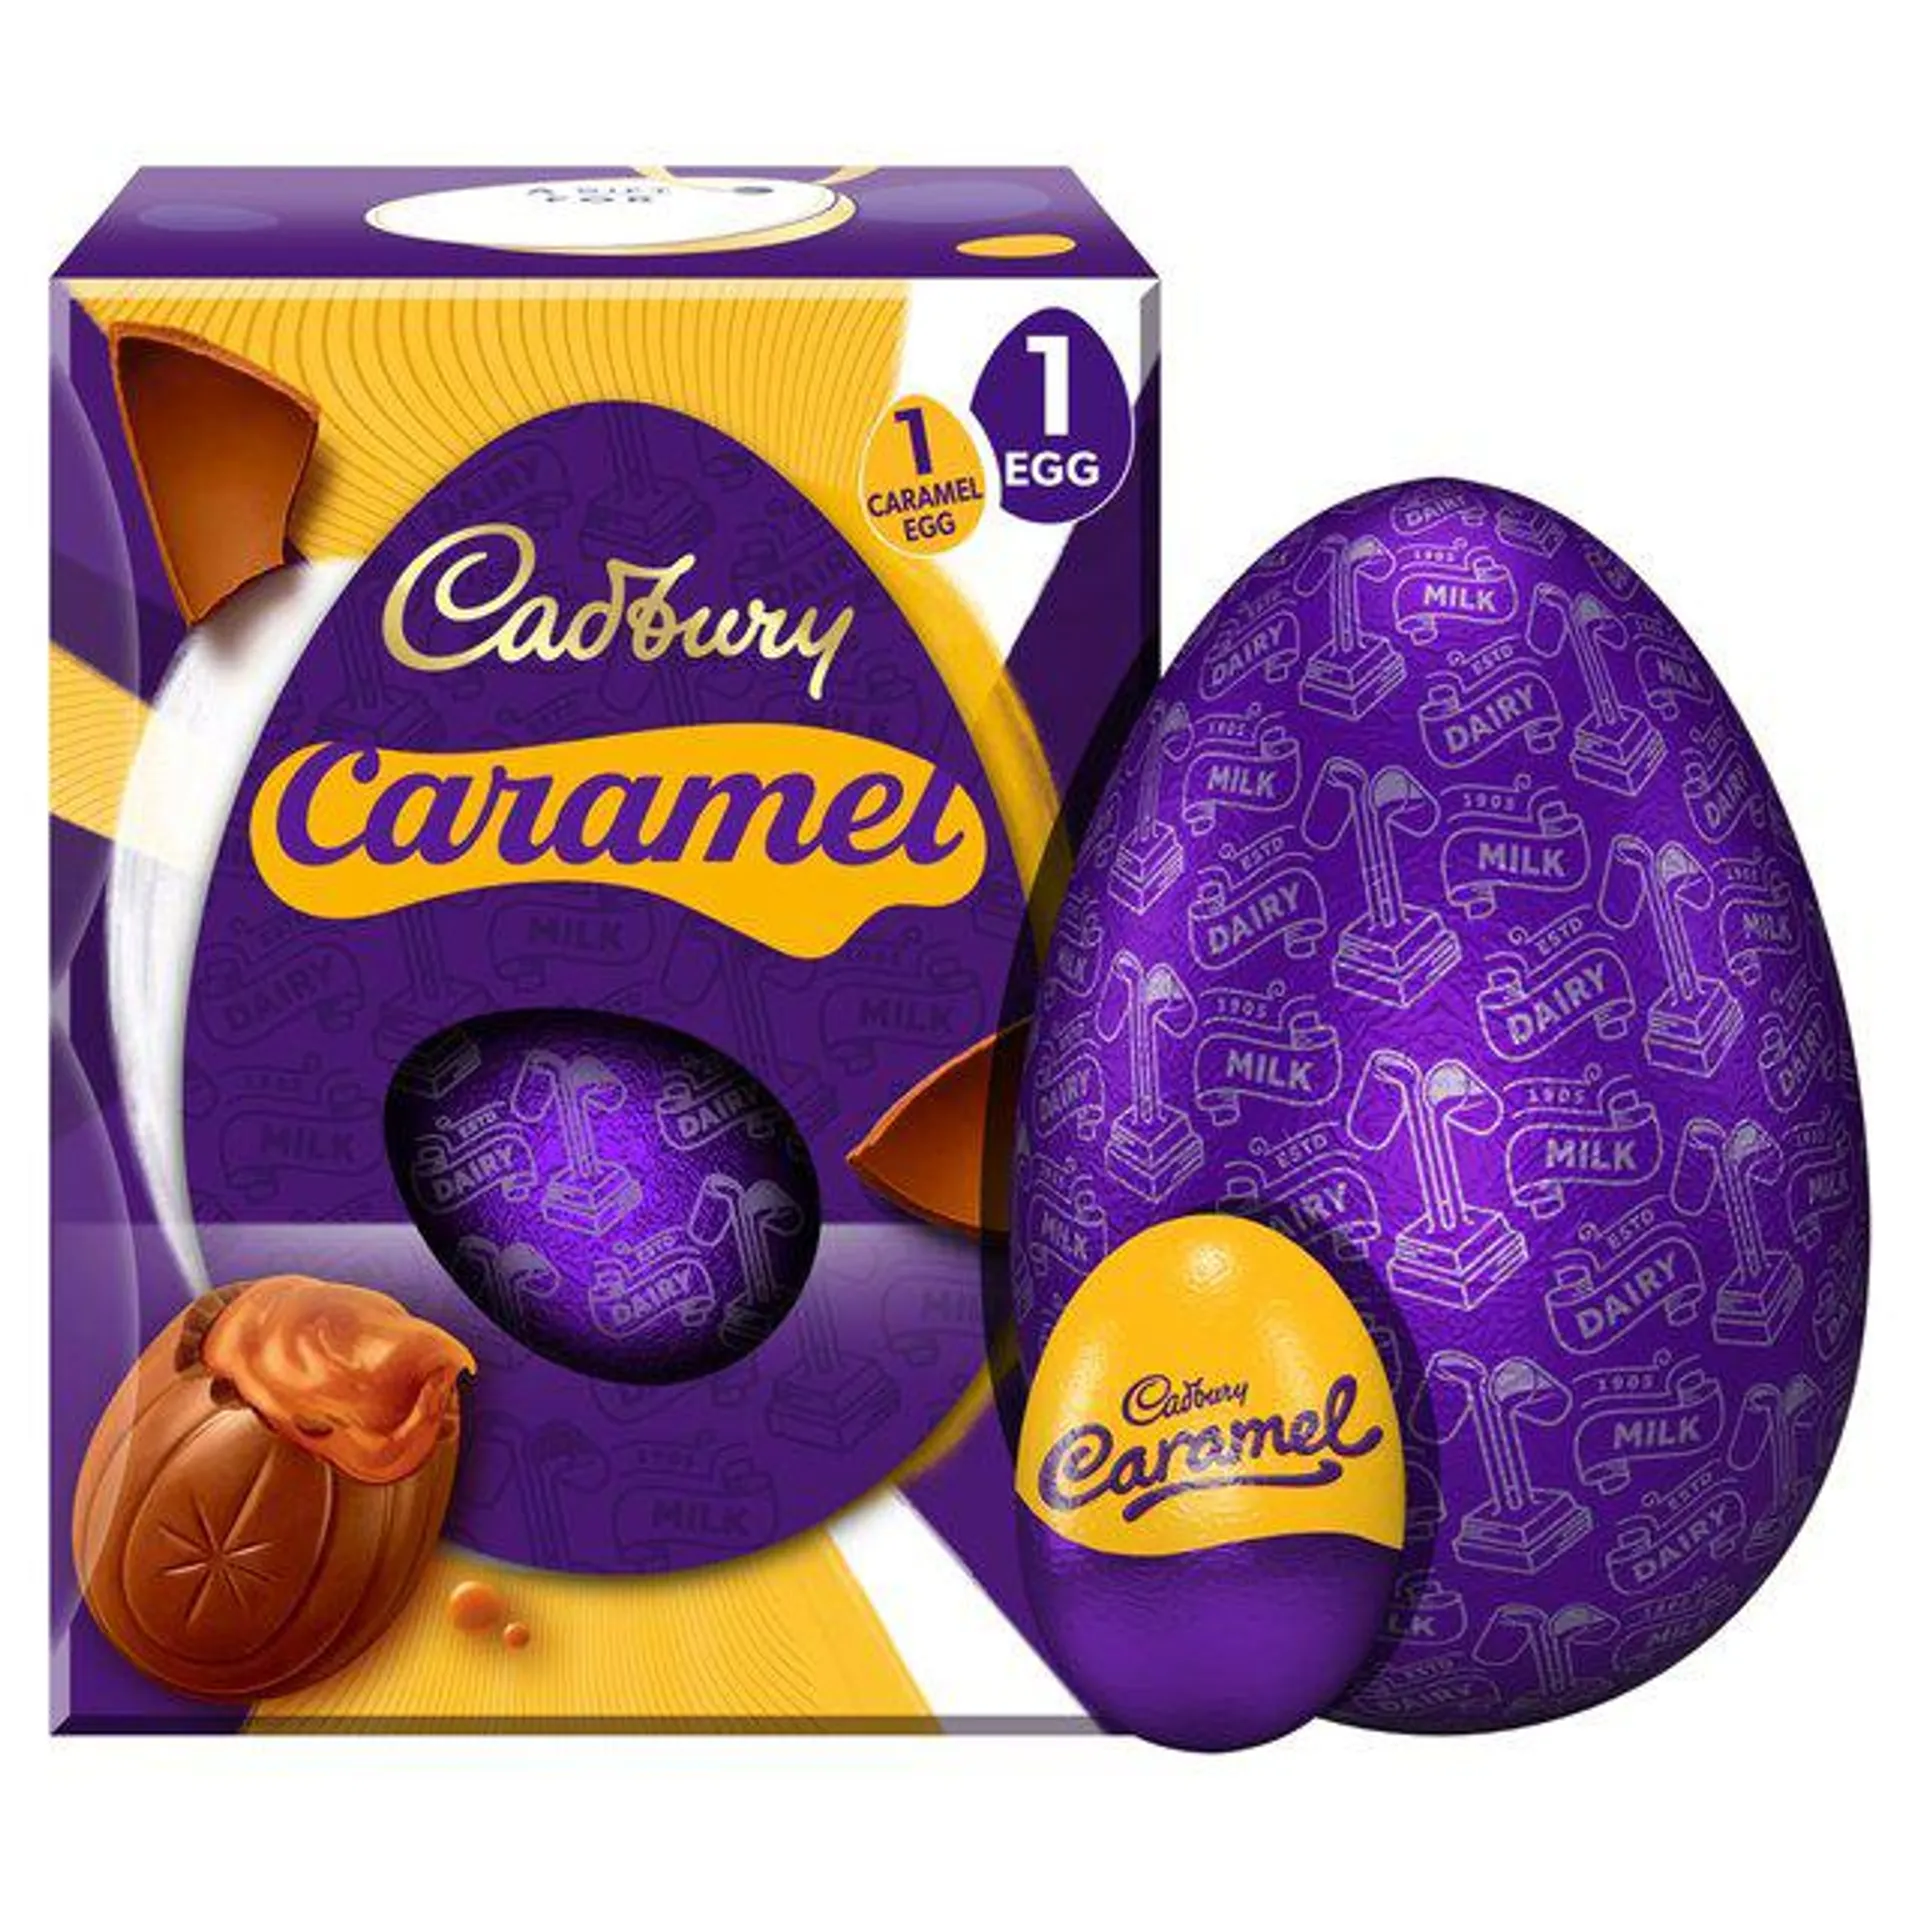 Cadbury Caramel Traditional Chocolate Easter Egg